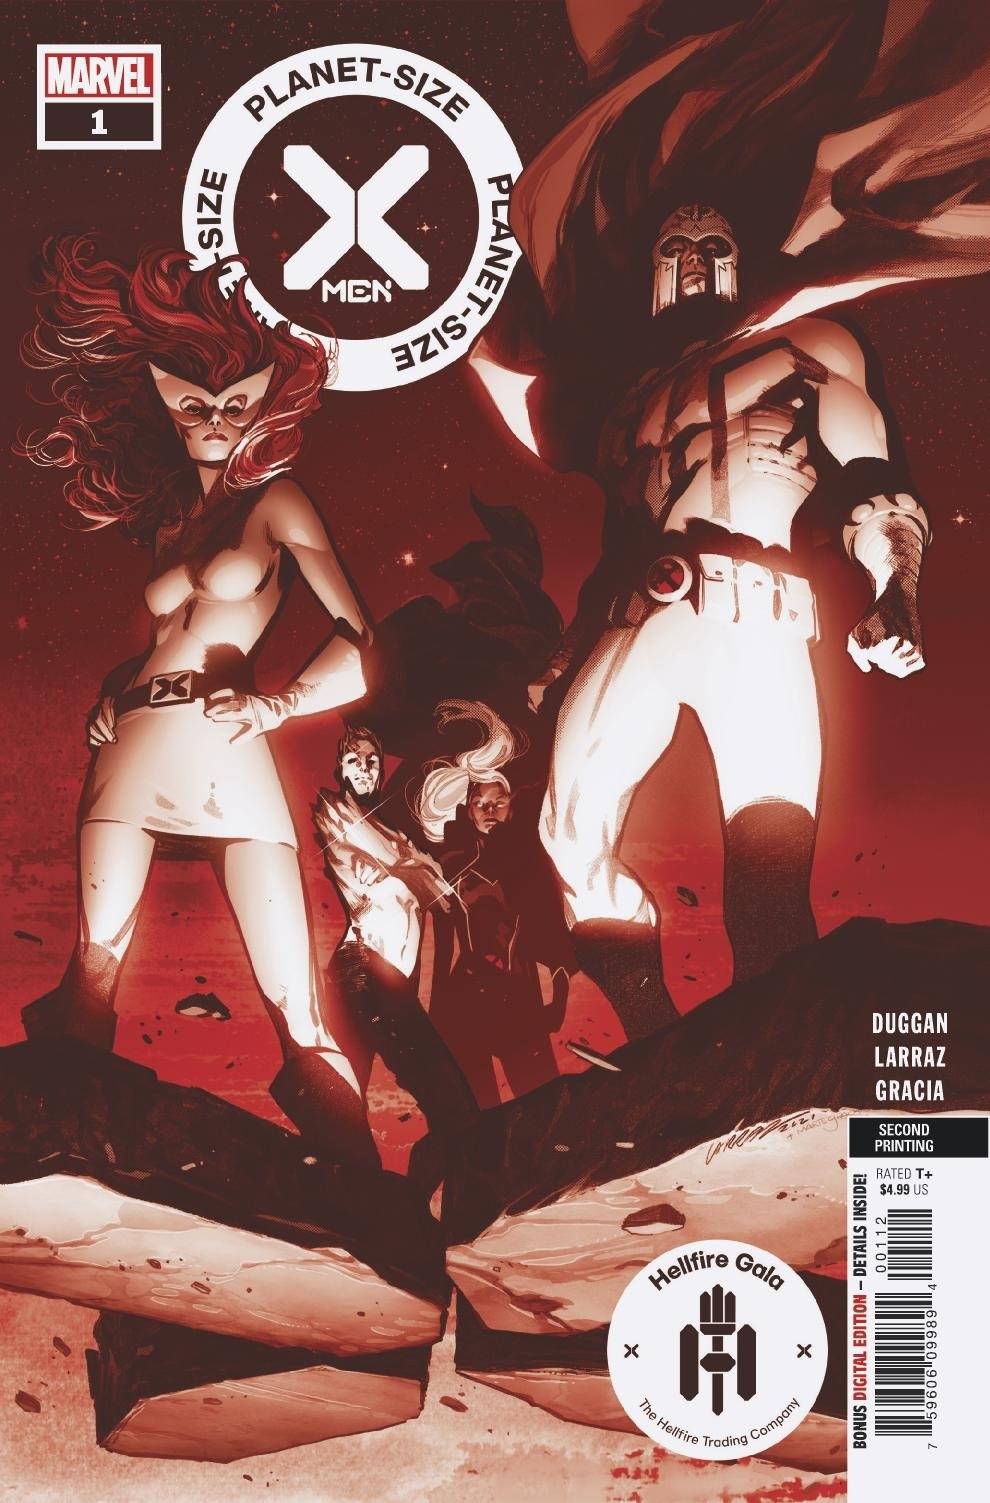 Planet-Sized X-Men #1 2nd Print Pepe Larraz Variant (07/28/2021) Marvel